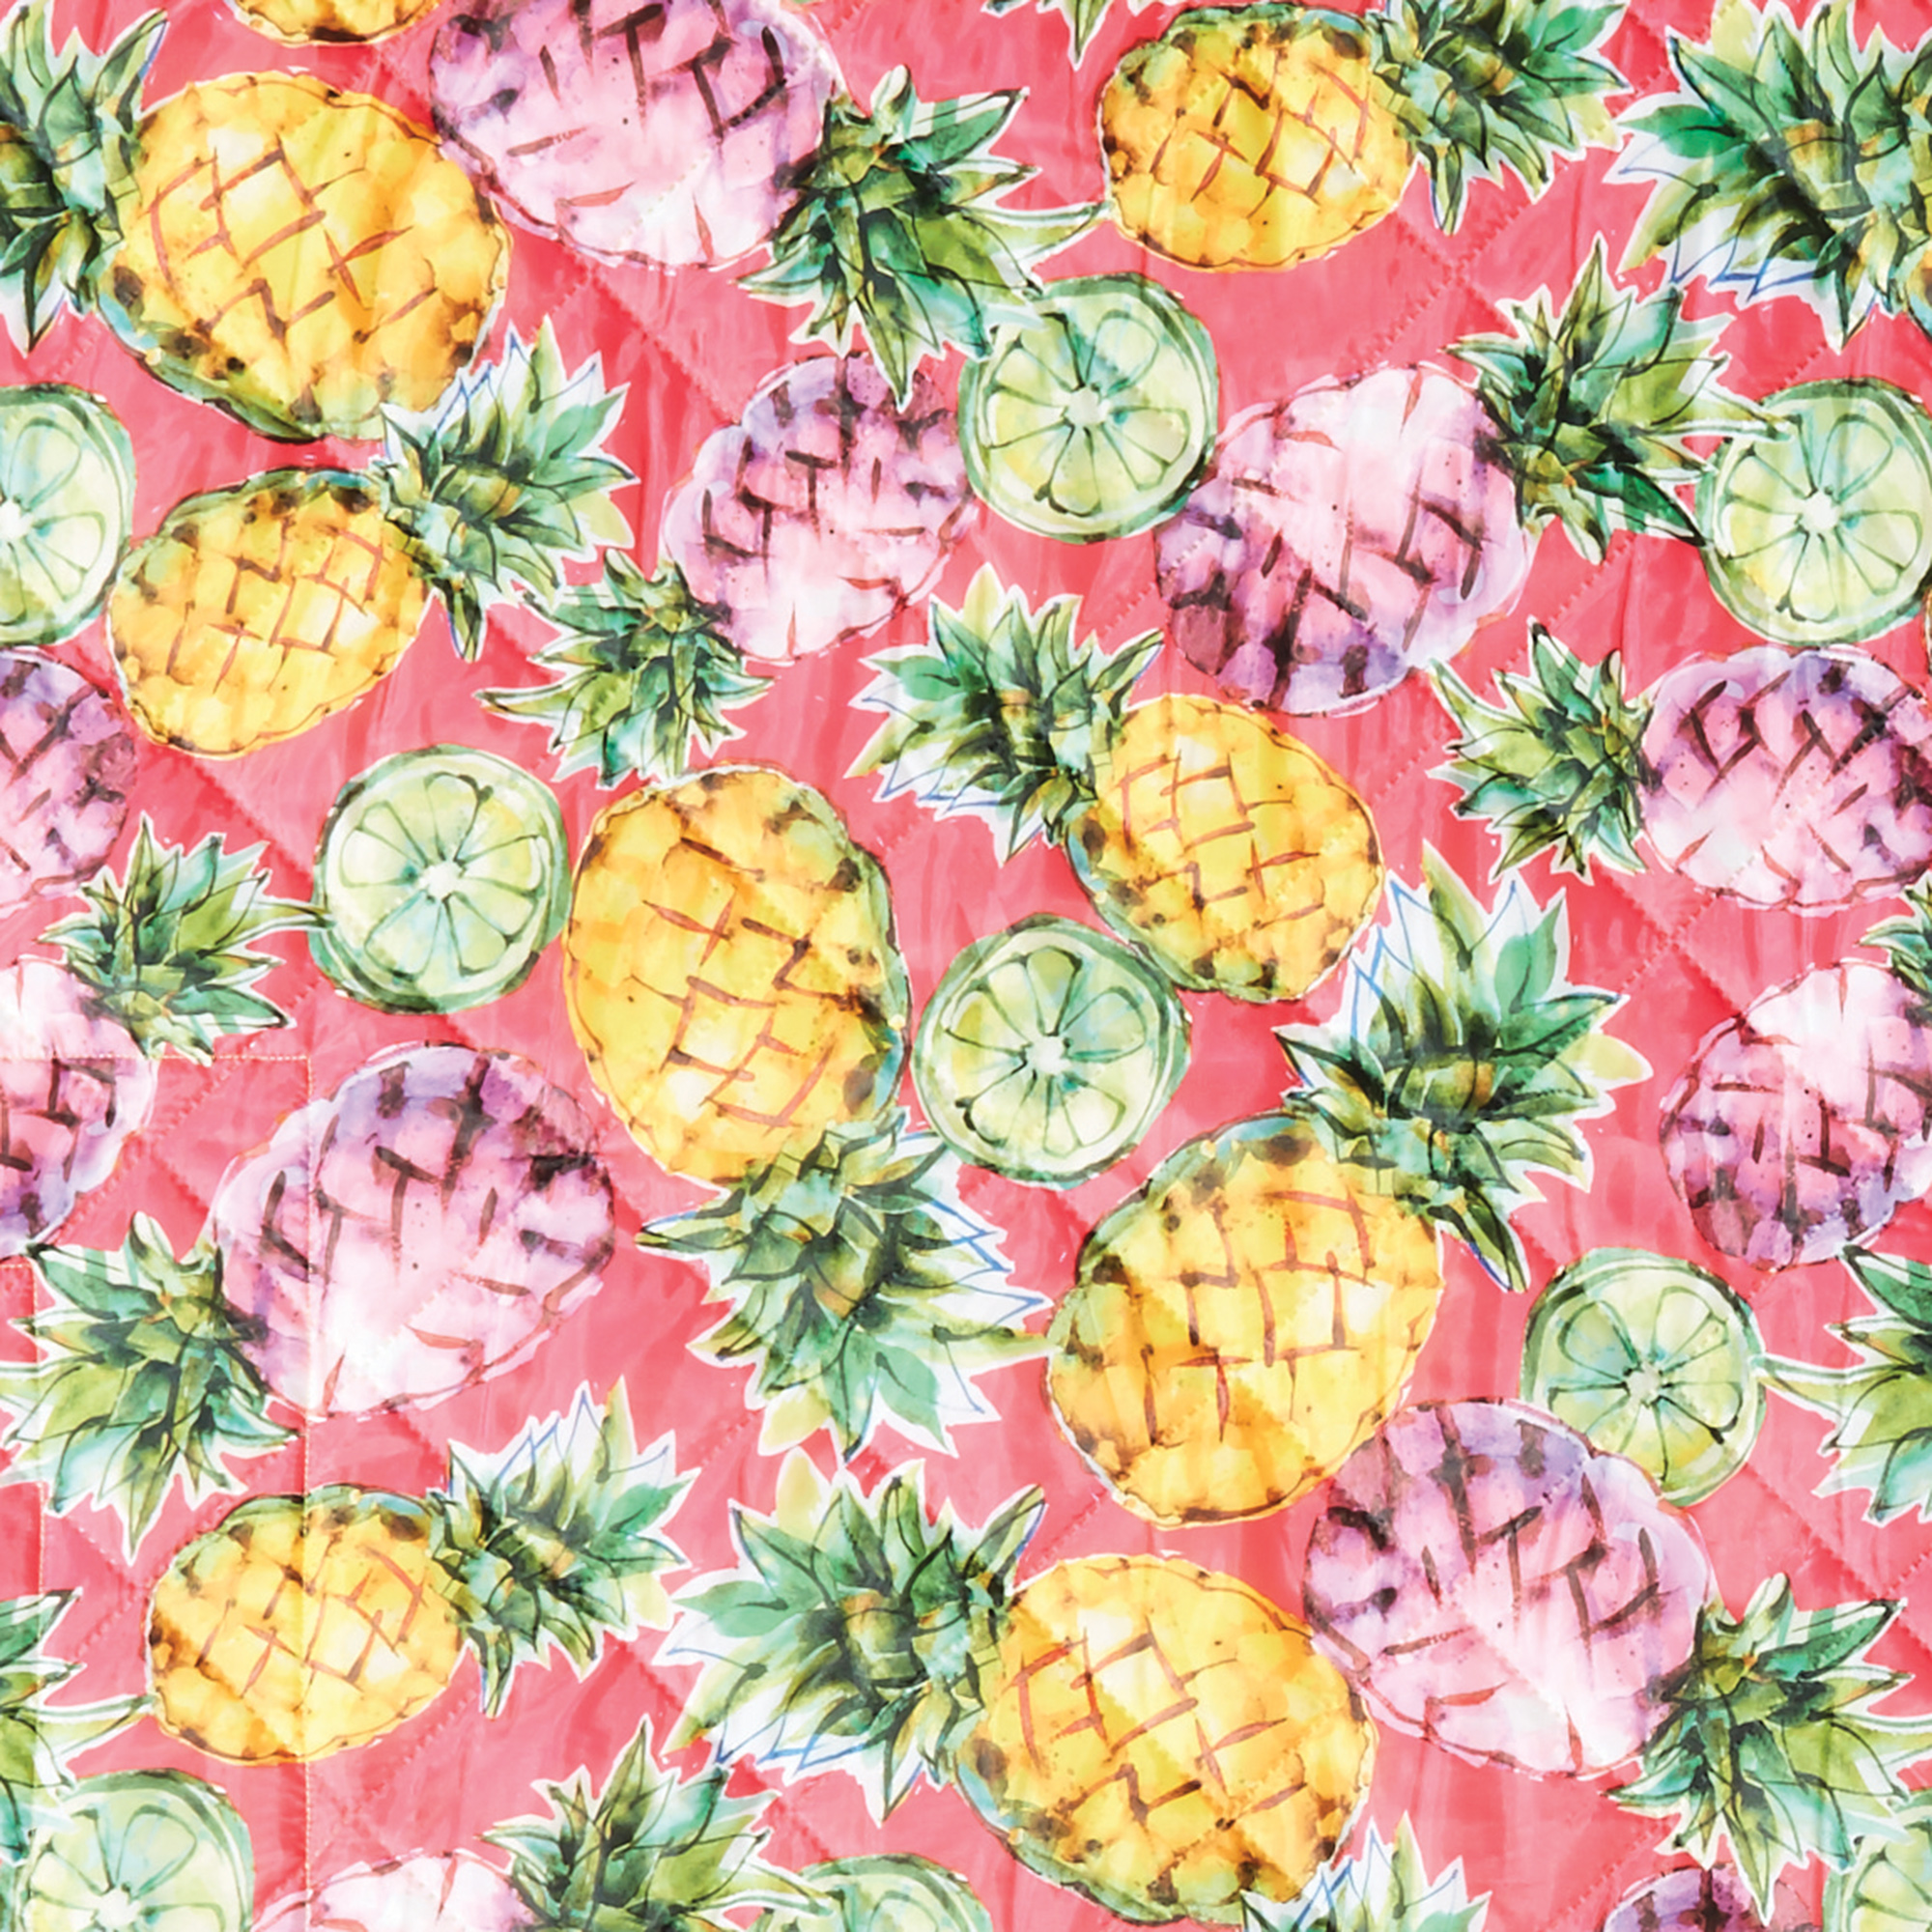 Mainstays Pineapple Outdoor Blanket, 1 Each - image 2 of 4